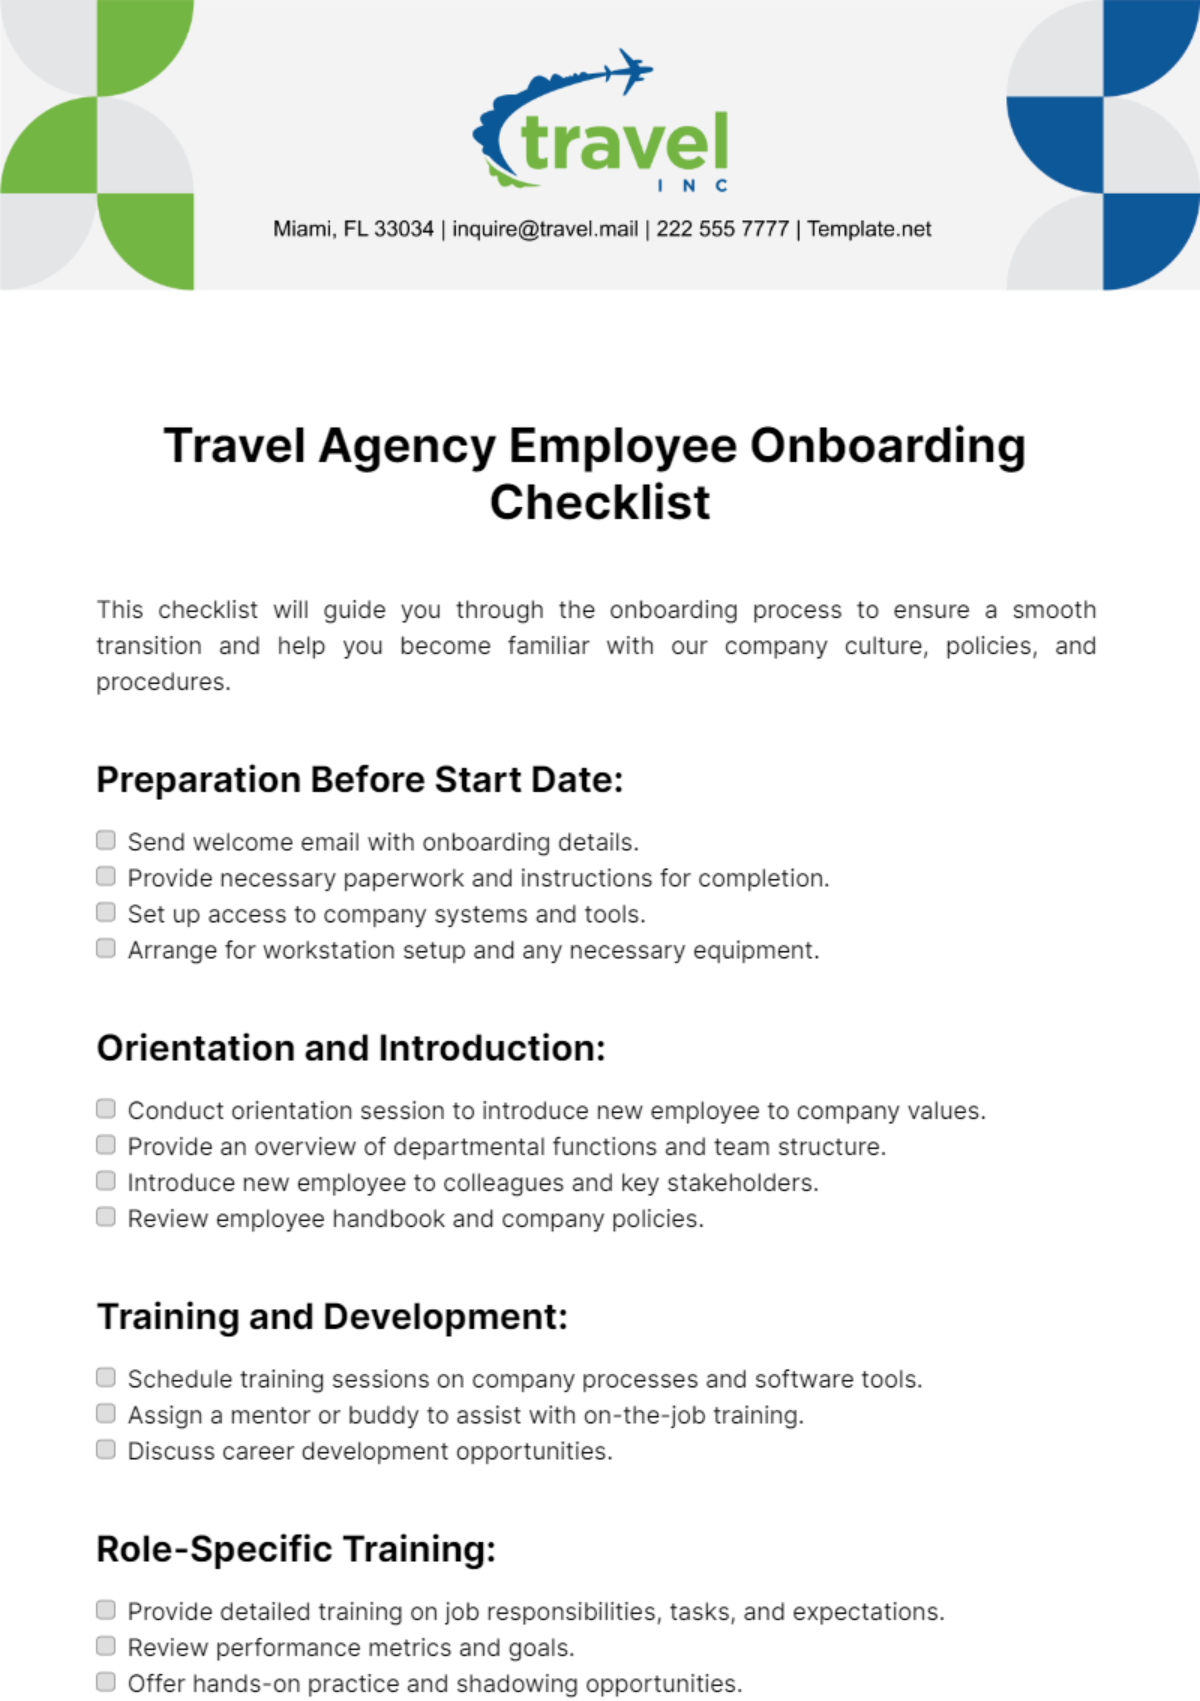 Travel Agency Employee Onboarding Checklist Template